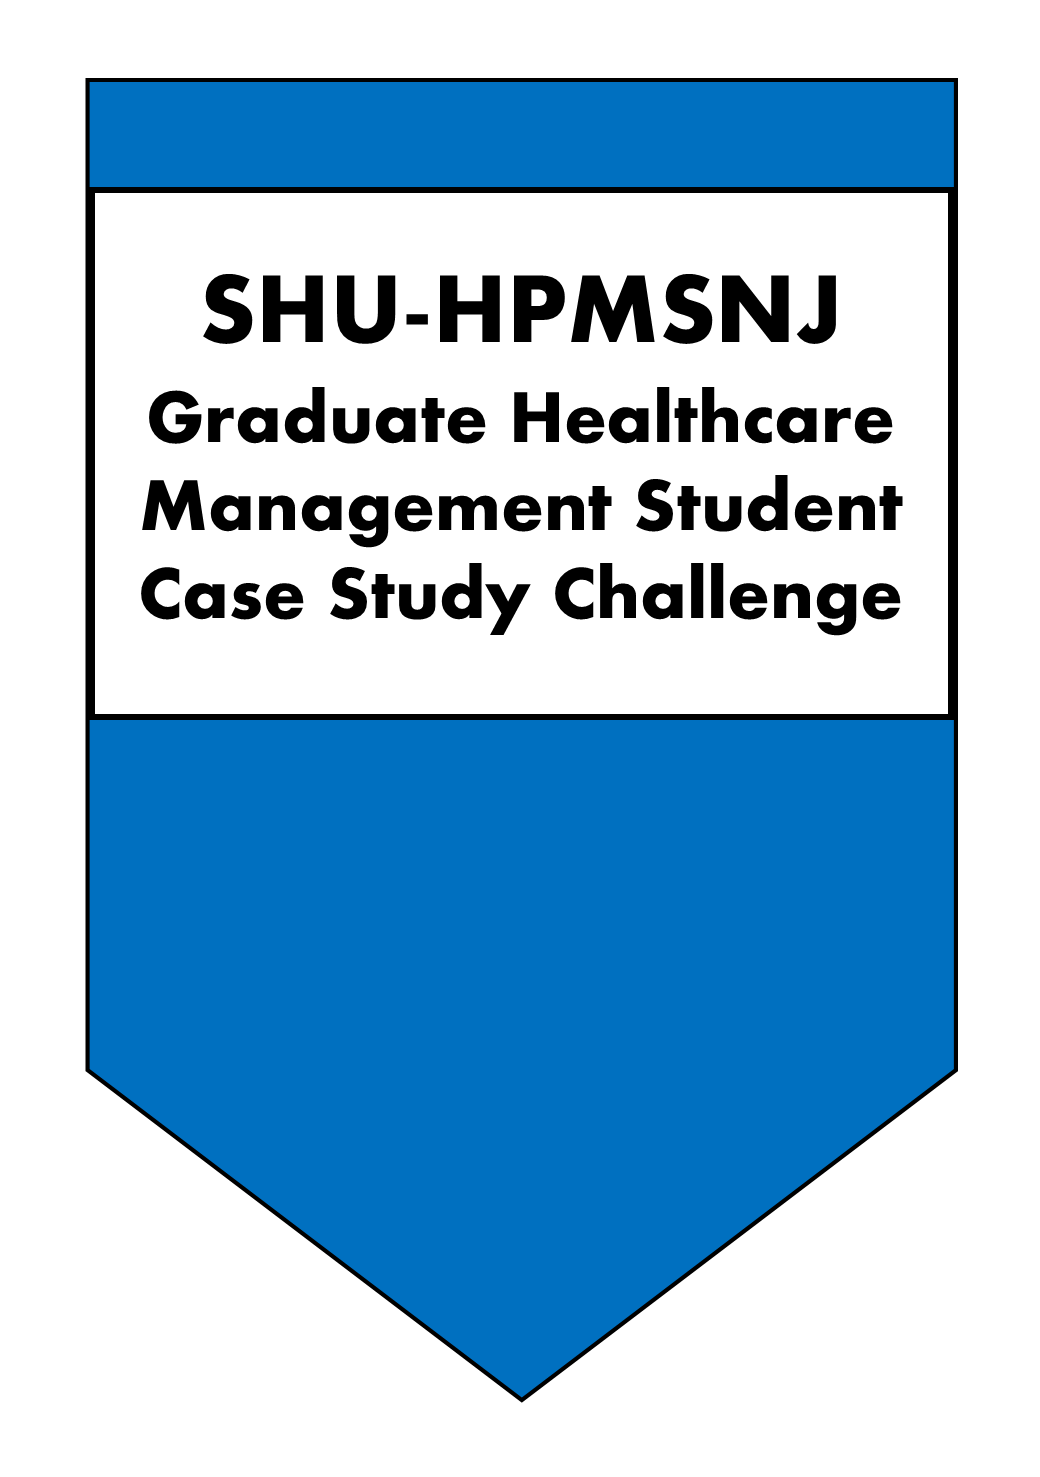 SHU-HPMSNJ Graduate Healthcare Management Student Case Study Challenge